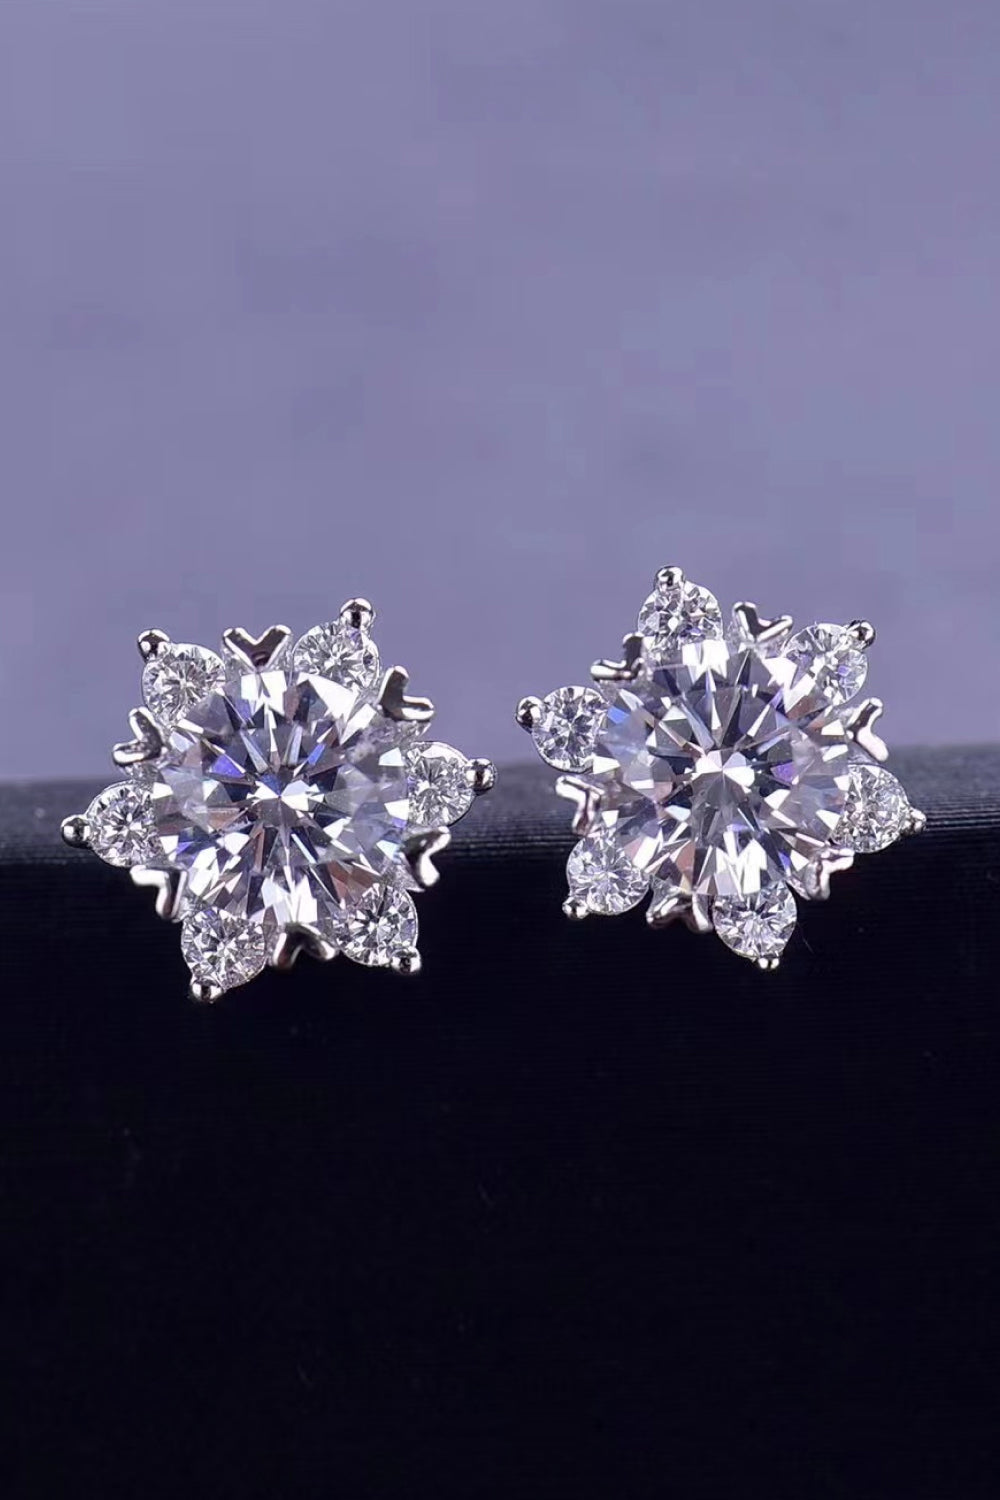 2 Carat Moissanite Floral Stud Earrings - Tophatter Deals